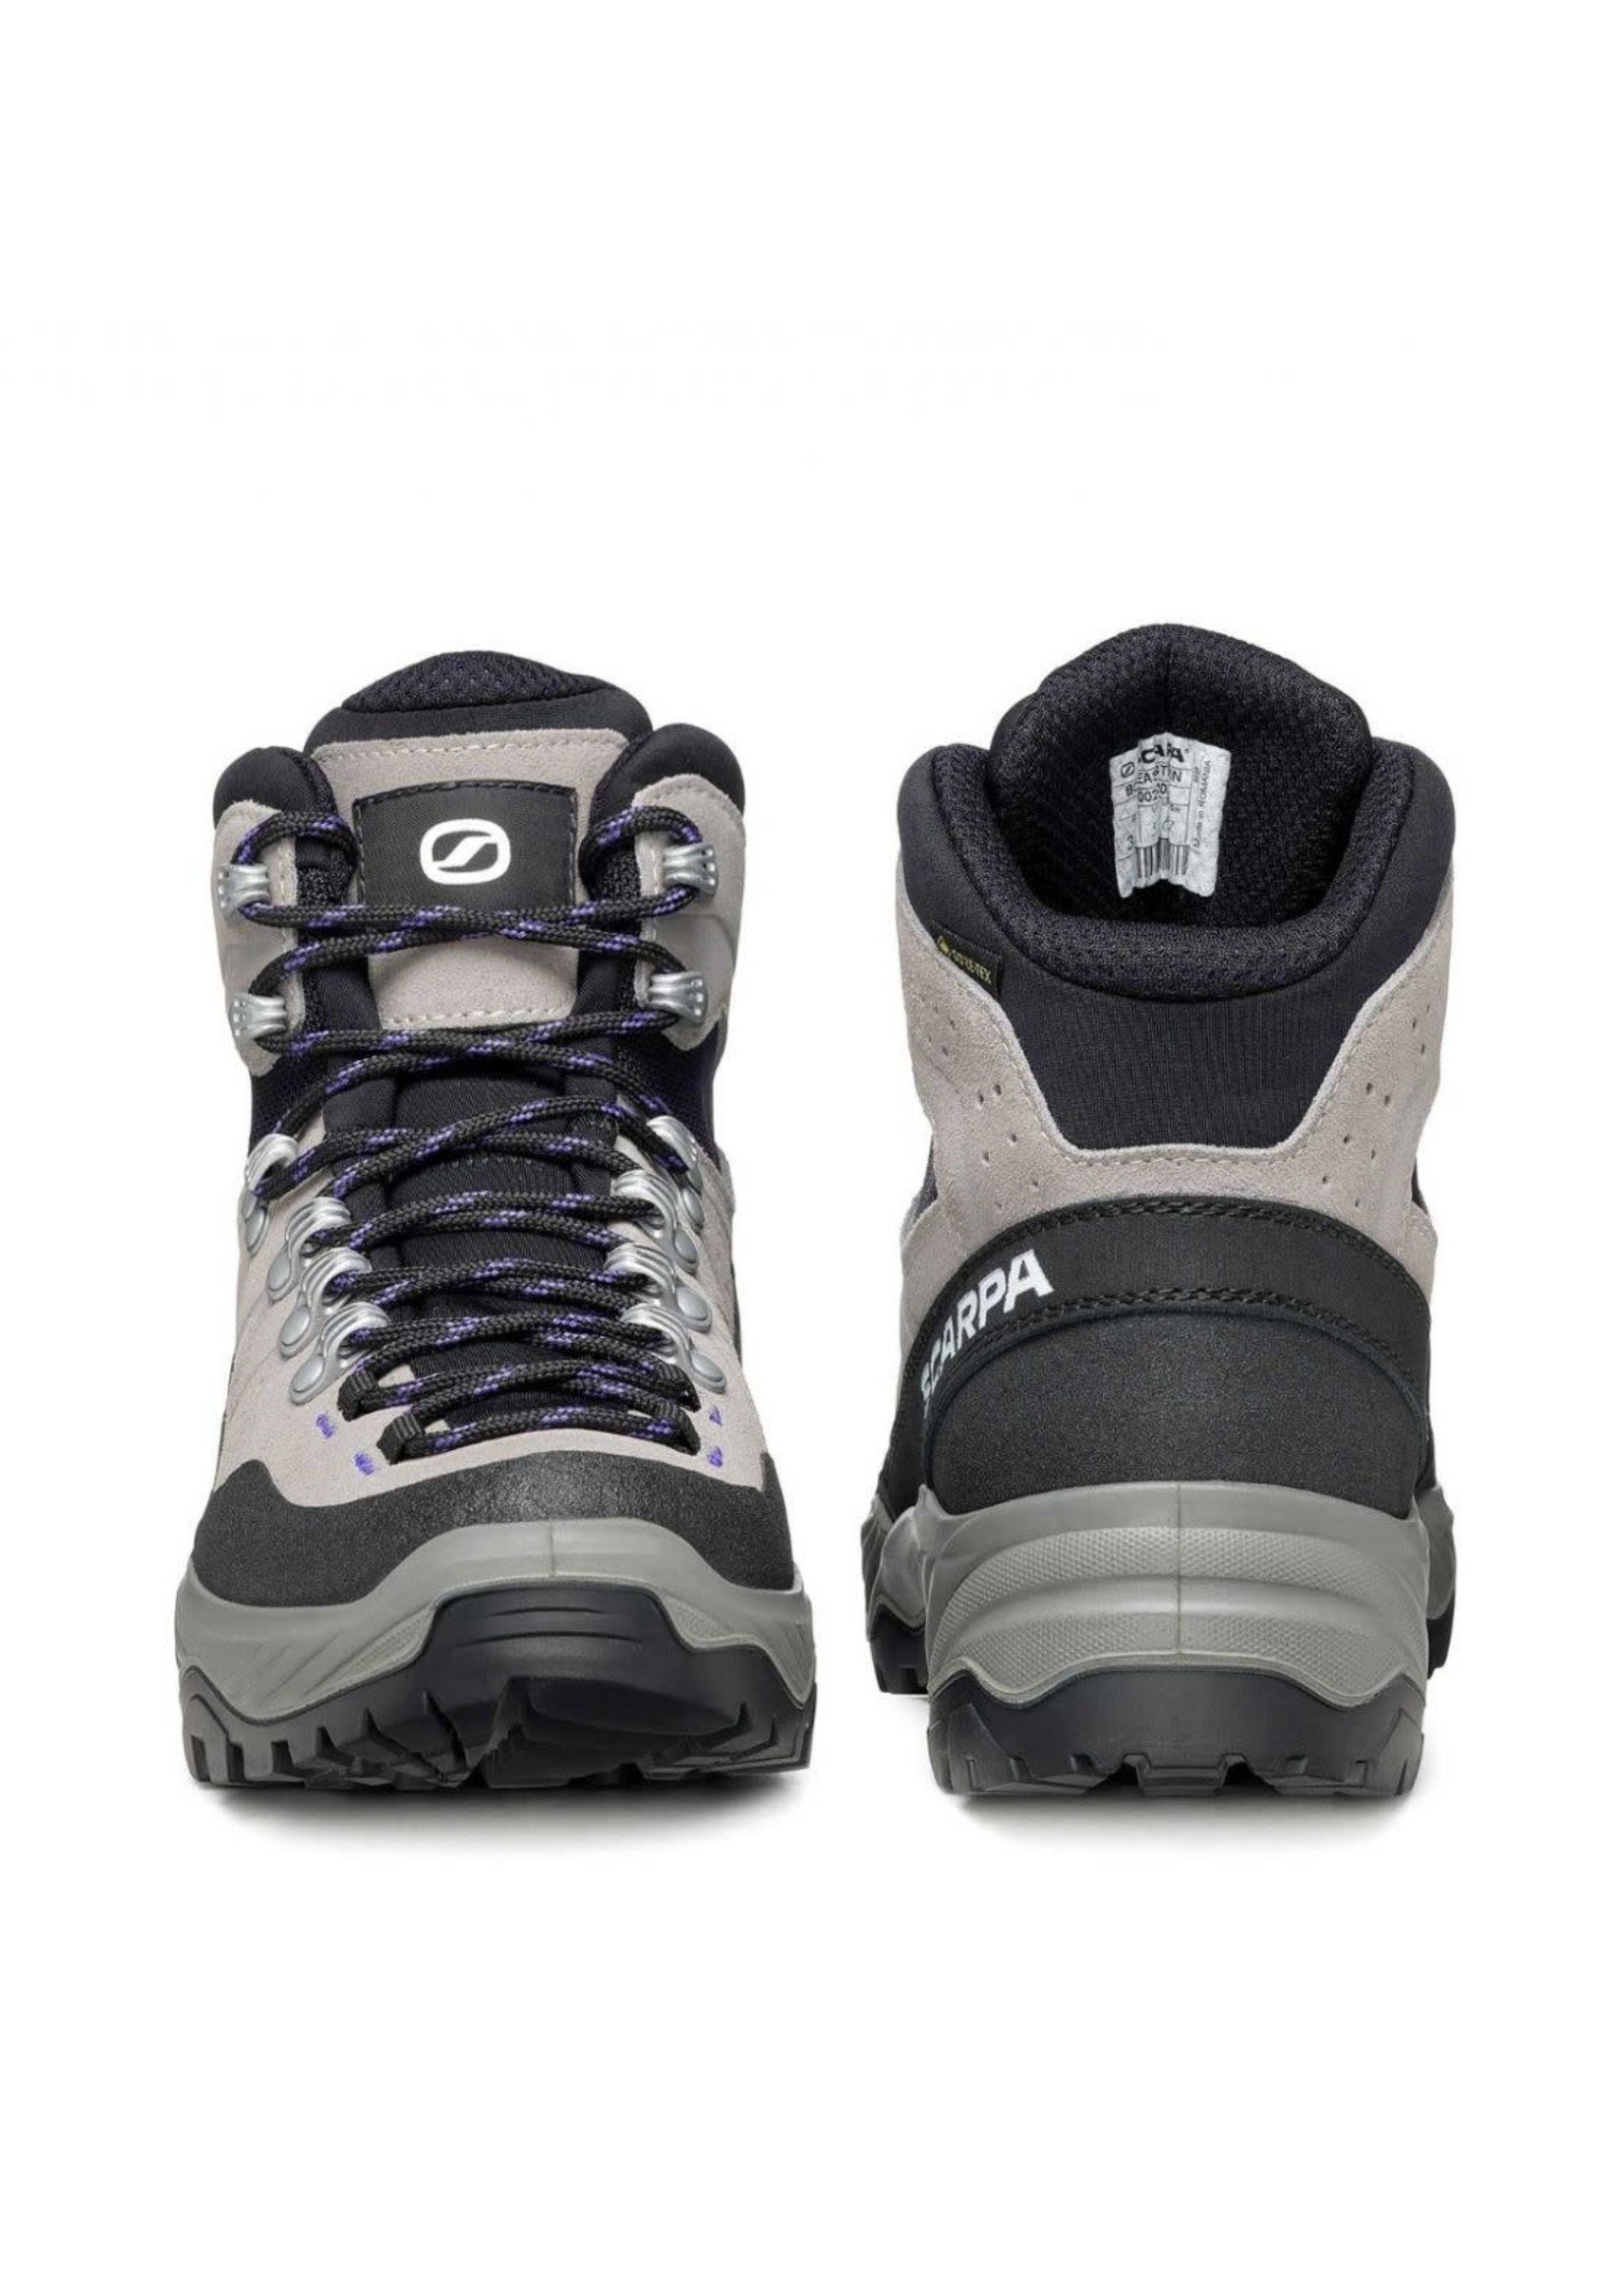 Scarpa Scarpa Boreas GTX Hiking Boots - Women